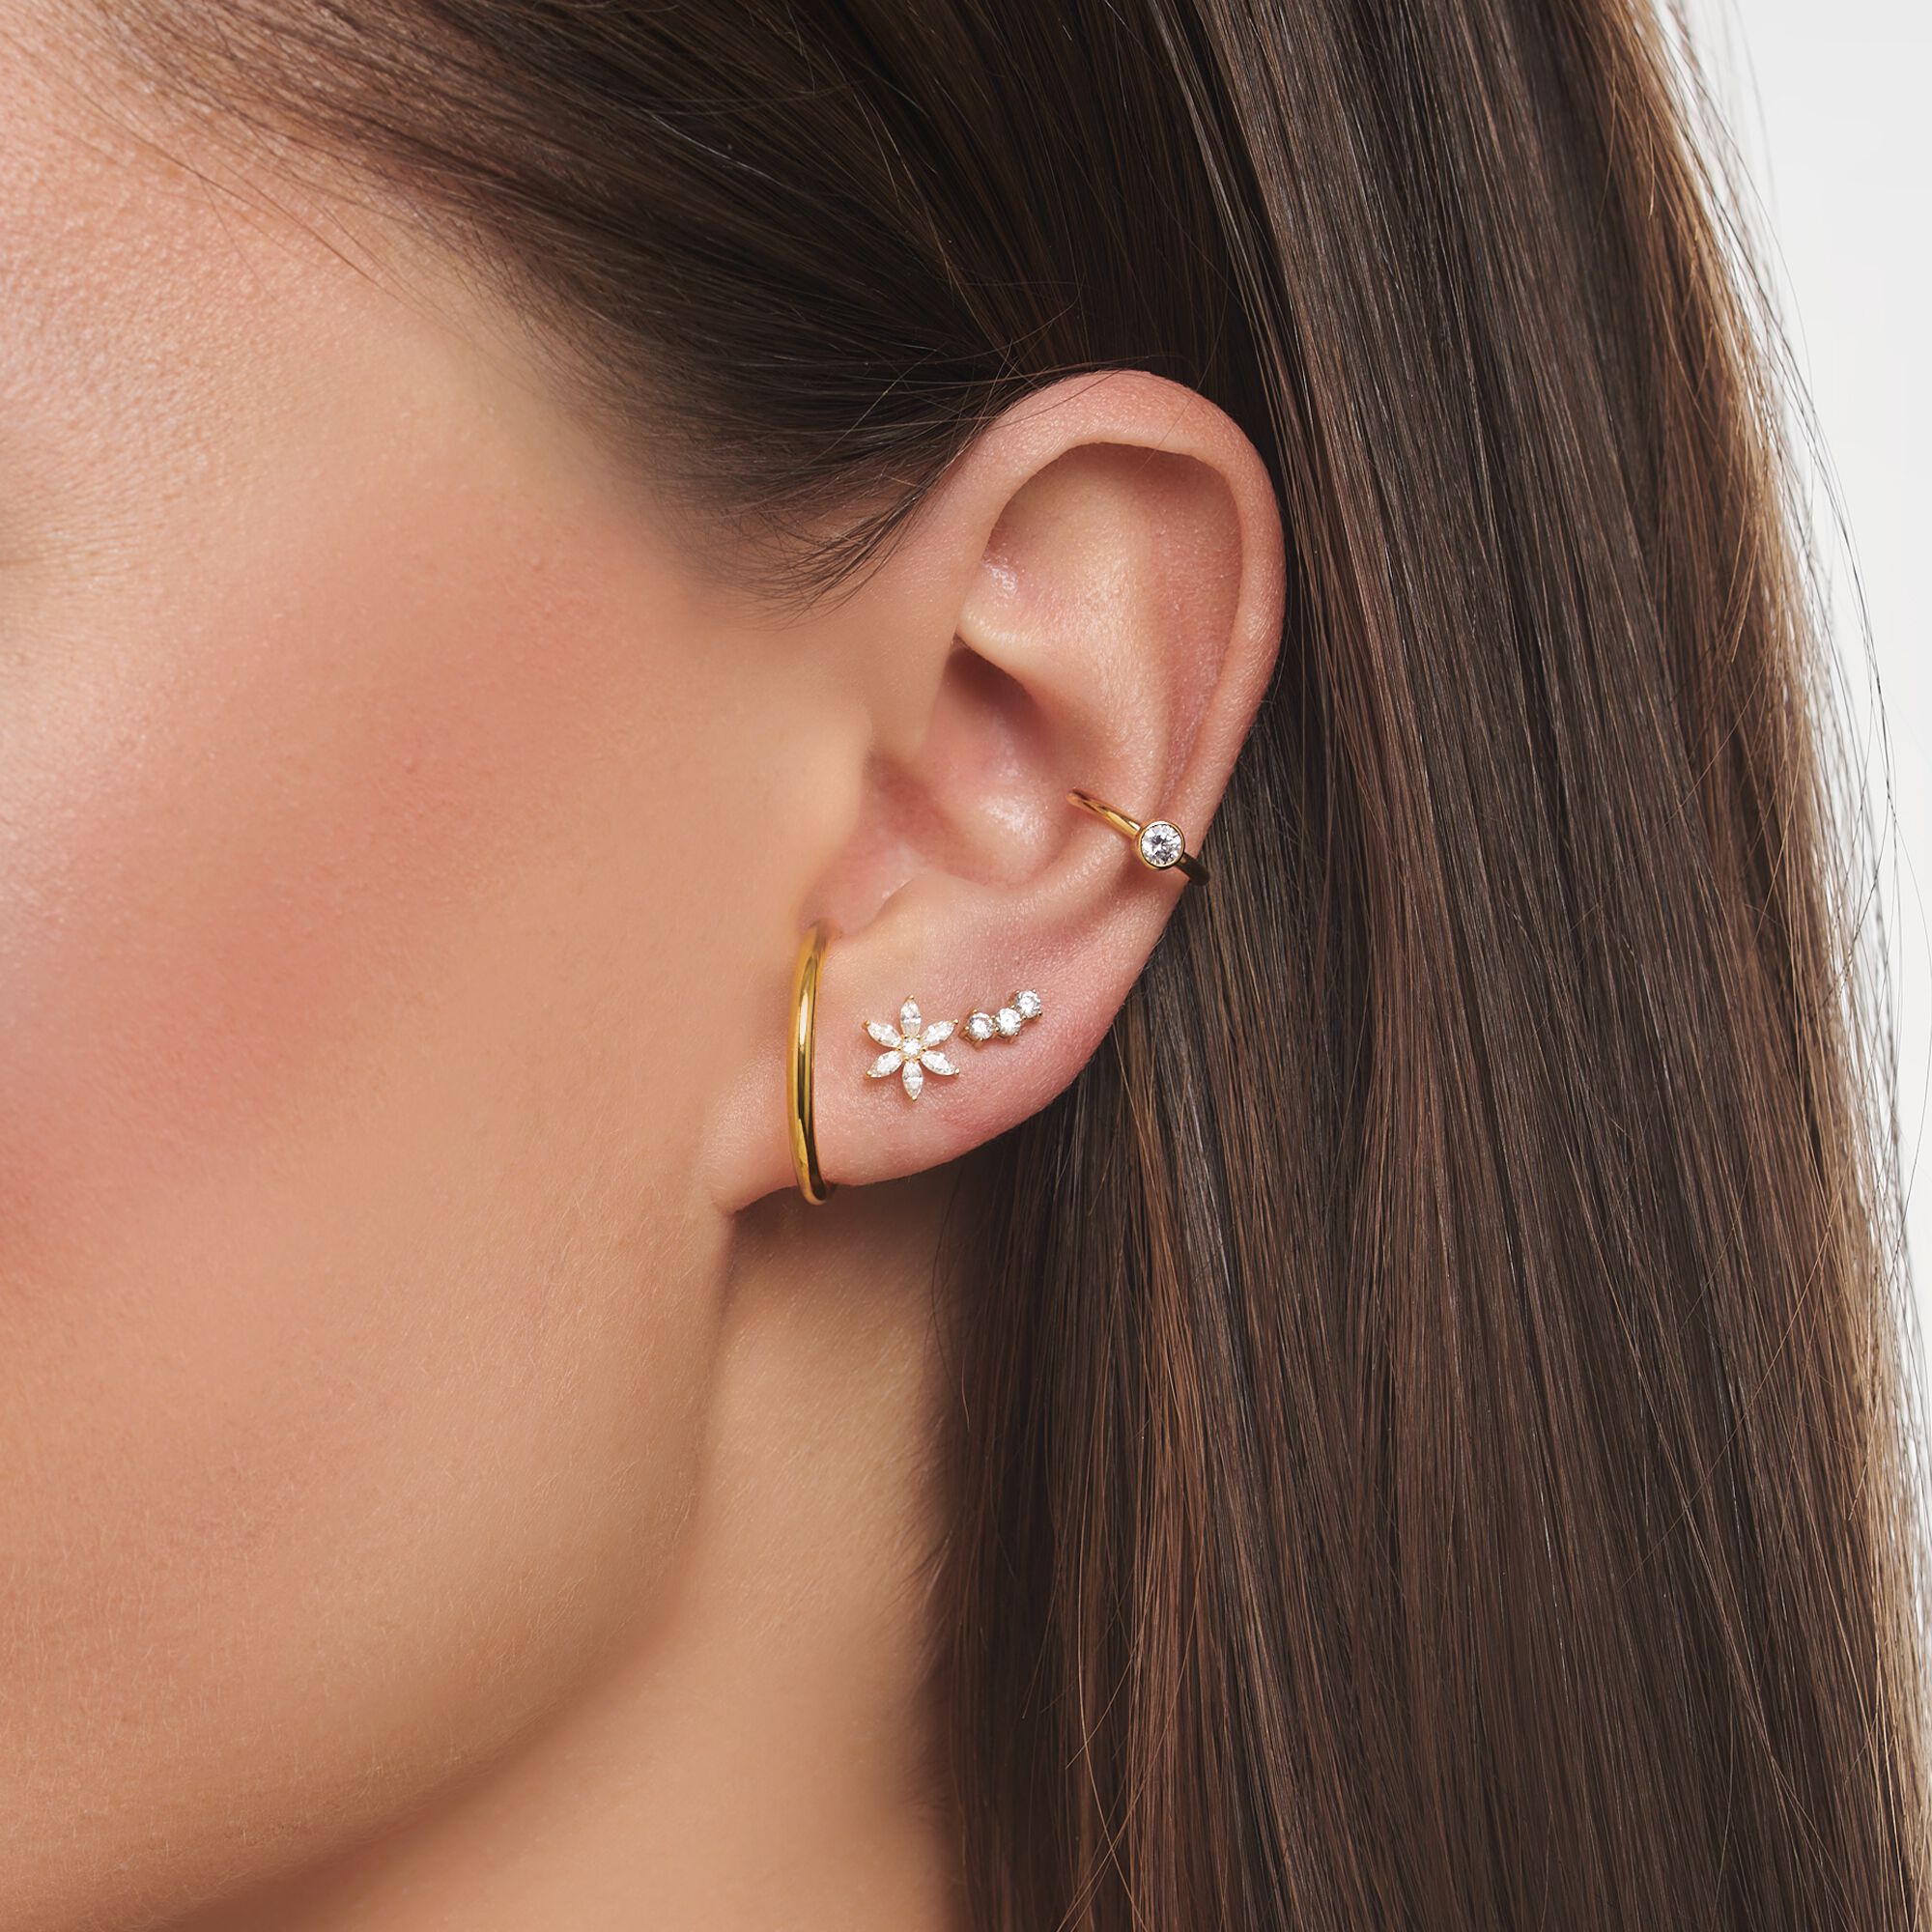 Single ear in THOMAS – flower stud shape, gold-coloured SABO